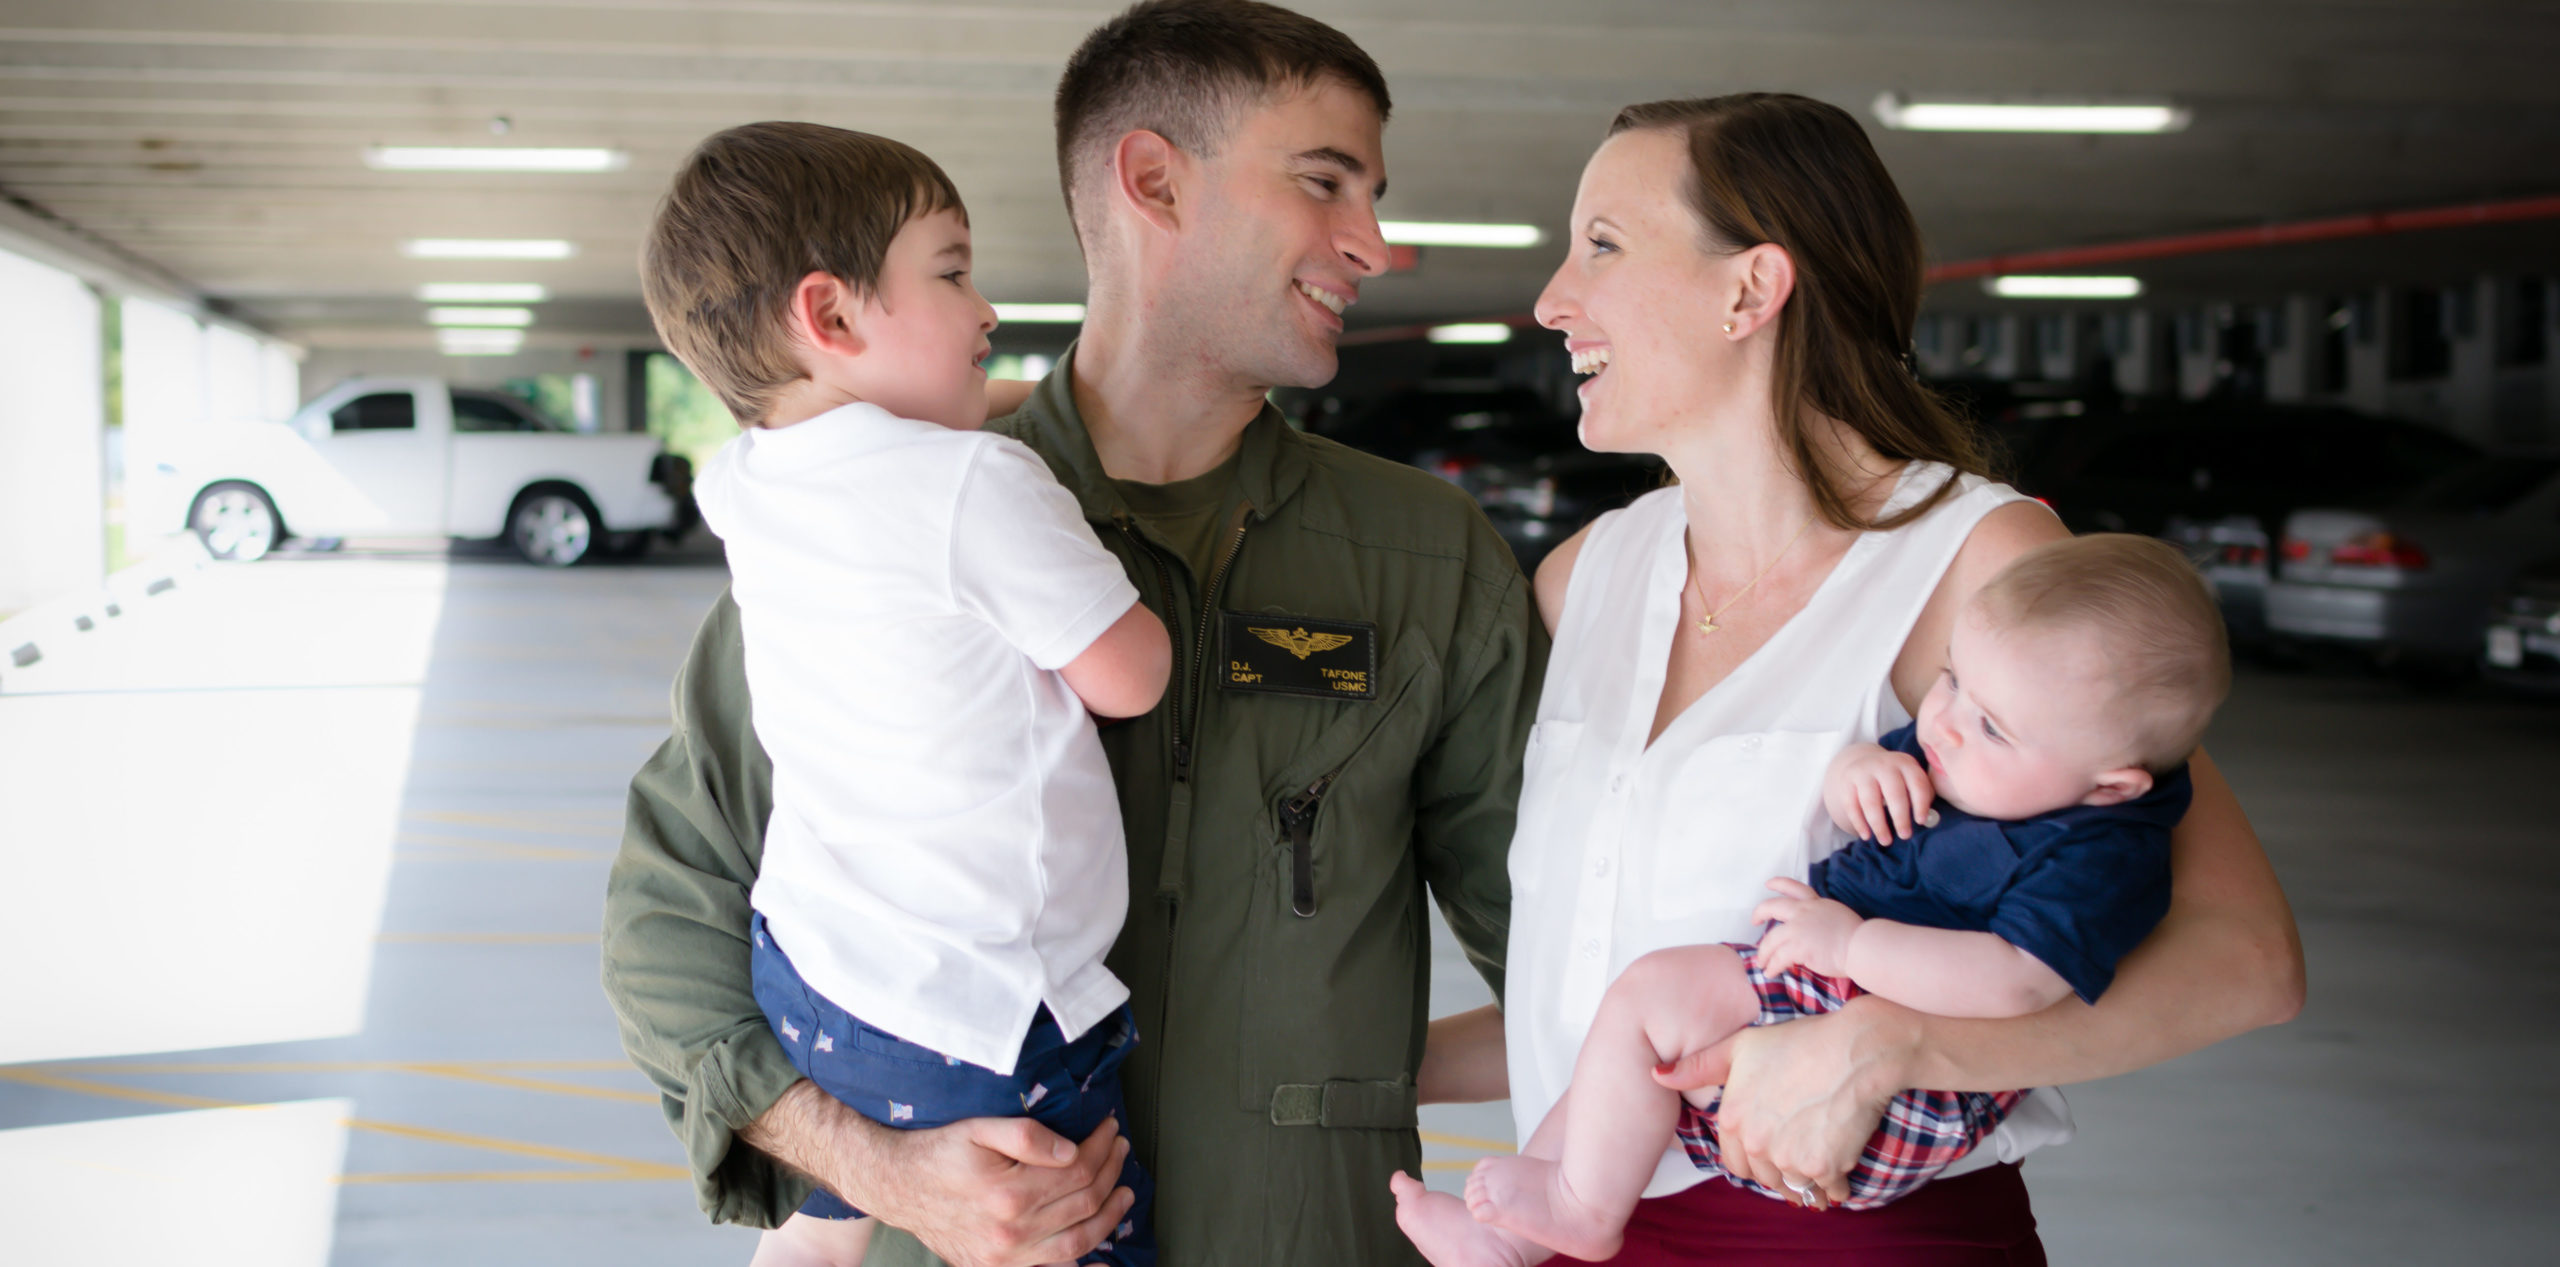 Military family